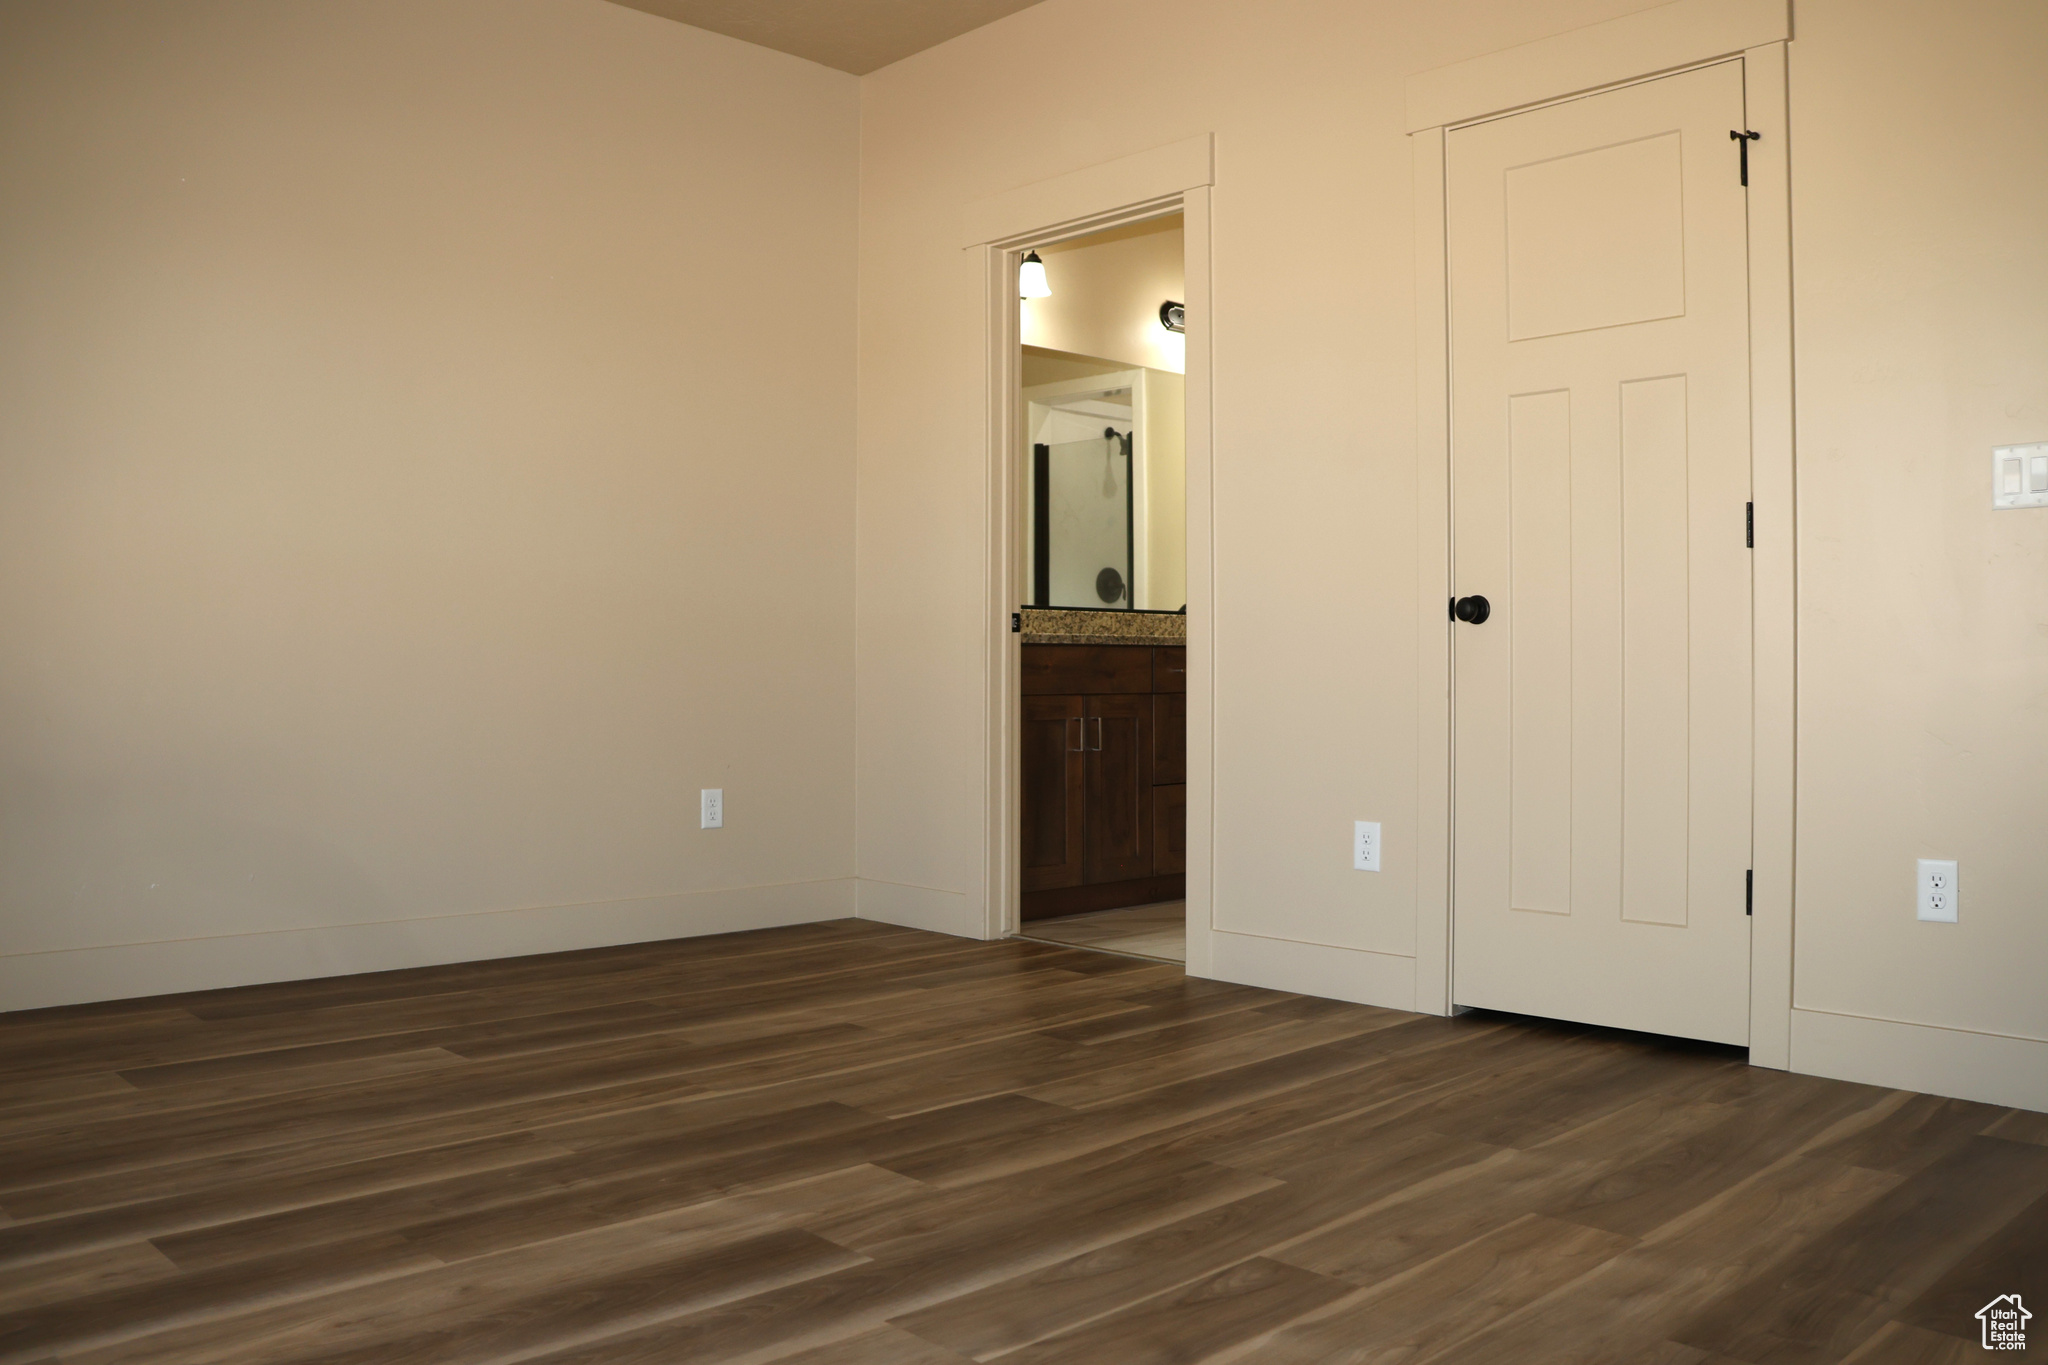 Unfurnished bedroom featuring dark wood-type flooring and ensuite bathroom